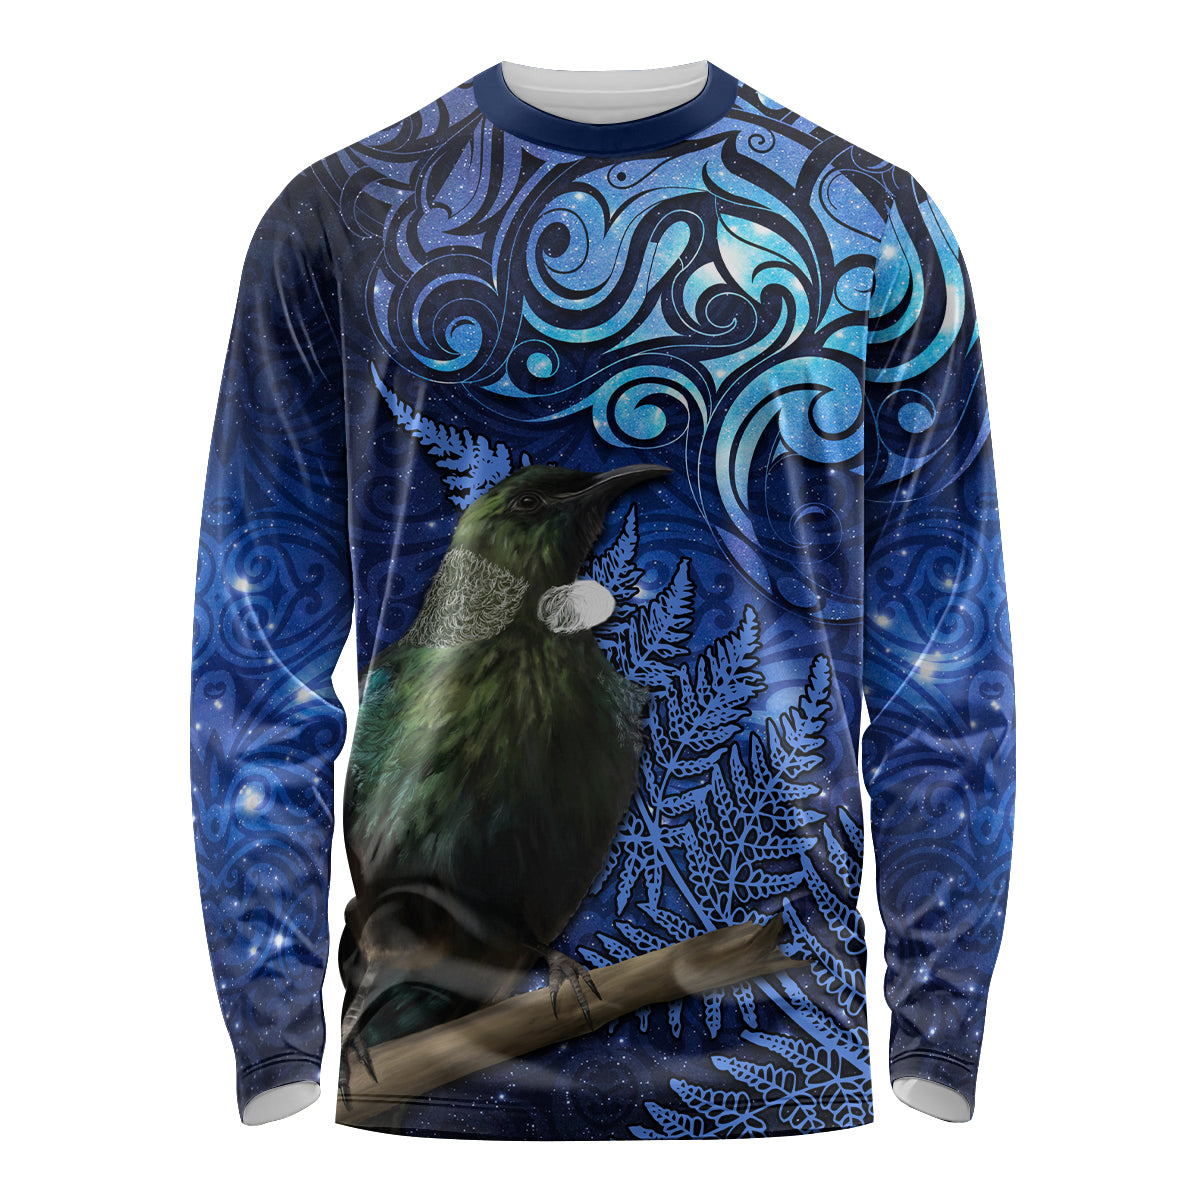 New Zealand Tui Bird Matariki Long Sleeve Shirt Maori New Year with Galaxy Fern